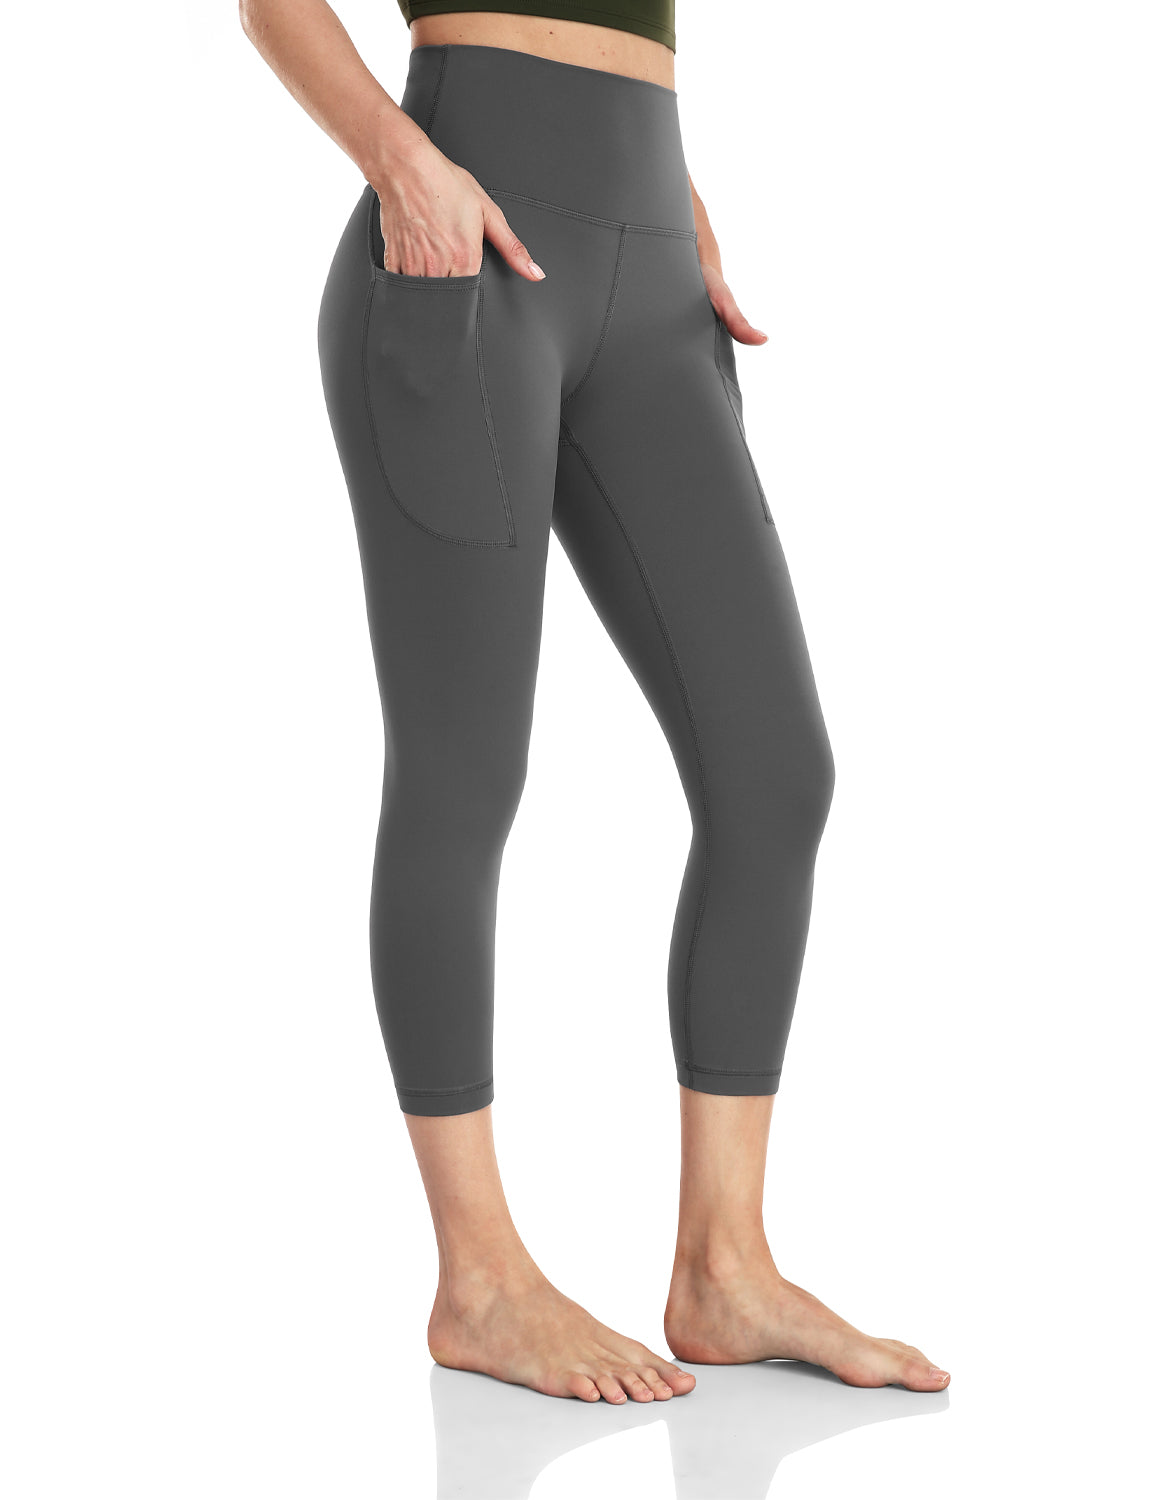 Aoliks Women's Capri Leggings High Waisted Side Pockets Workout Pants Teal